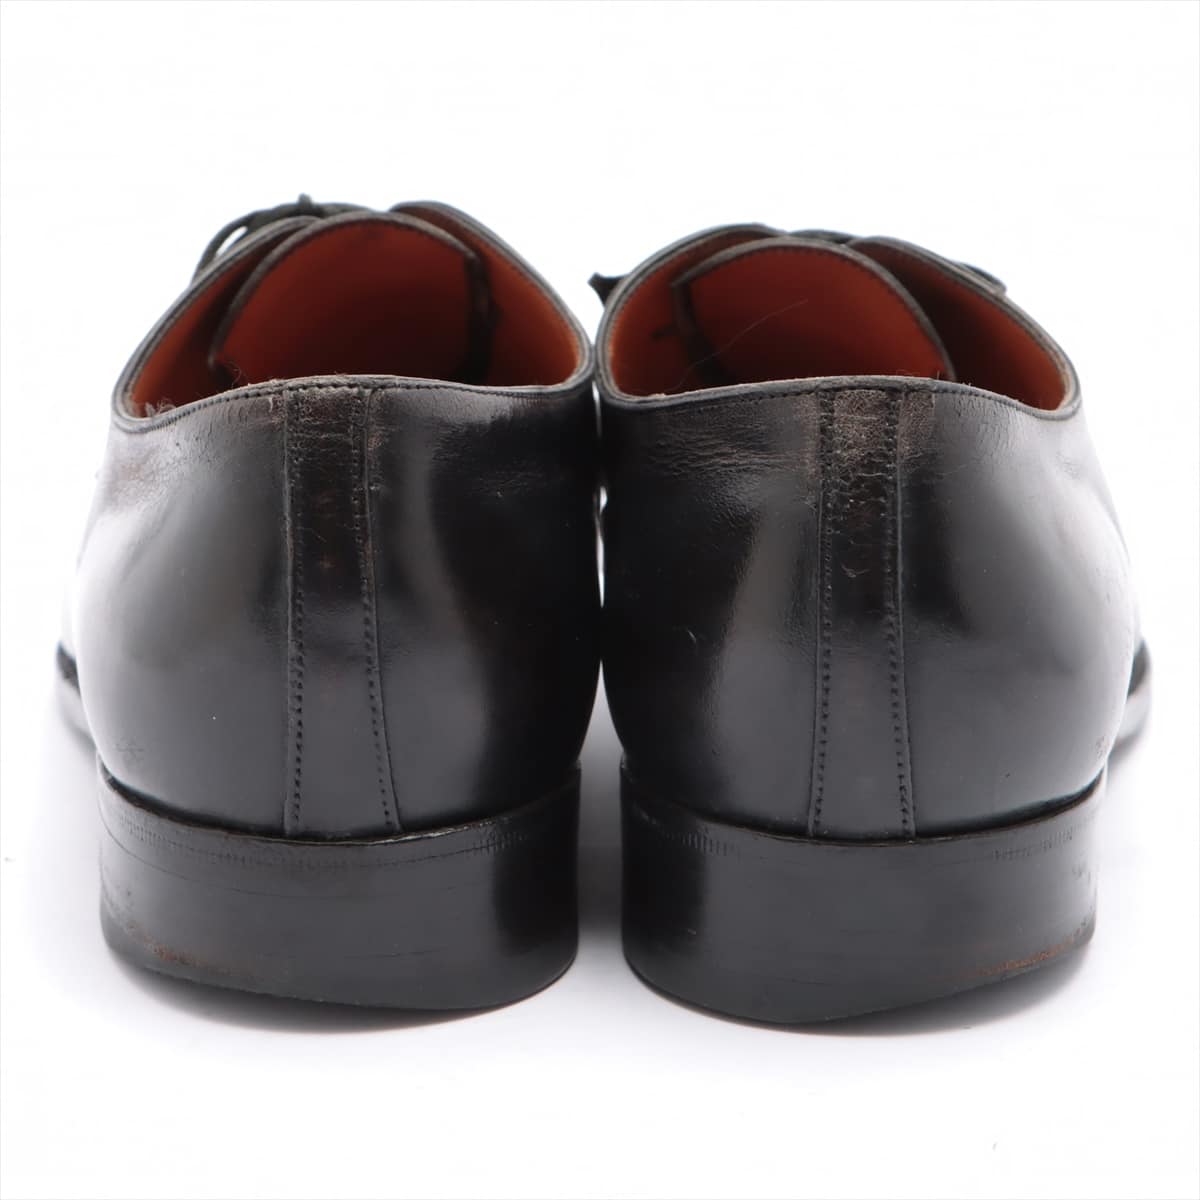 J. M. Weston Leather Leather shoes 7.5D Men's Black Resoled